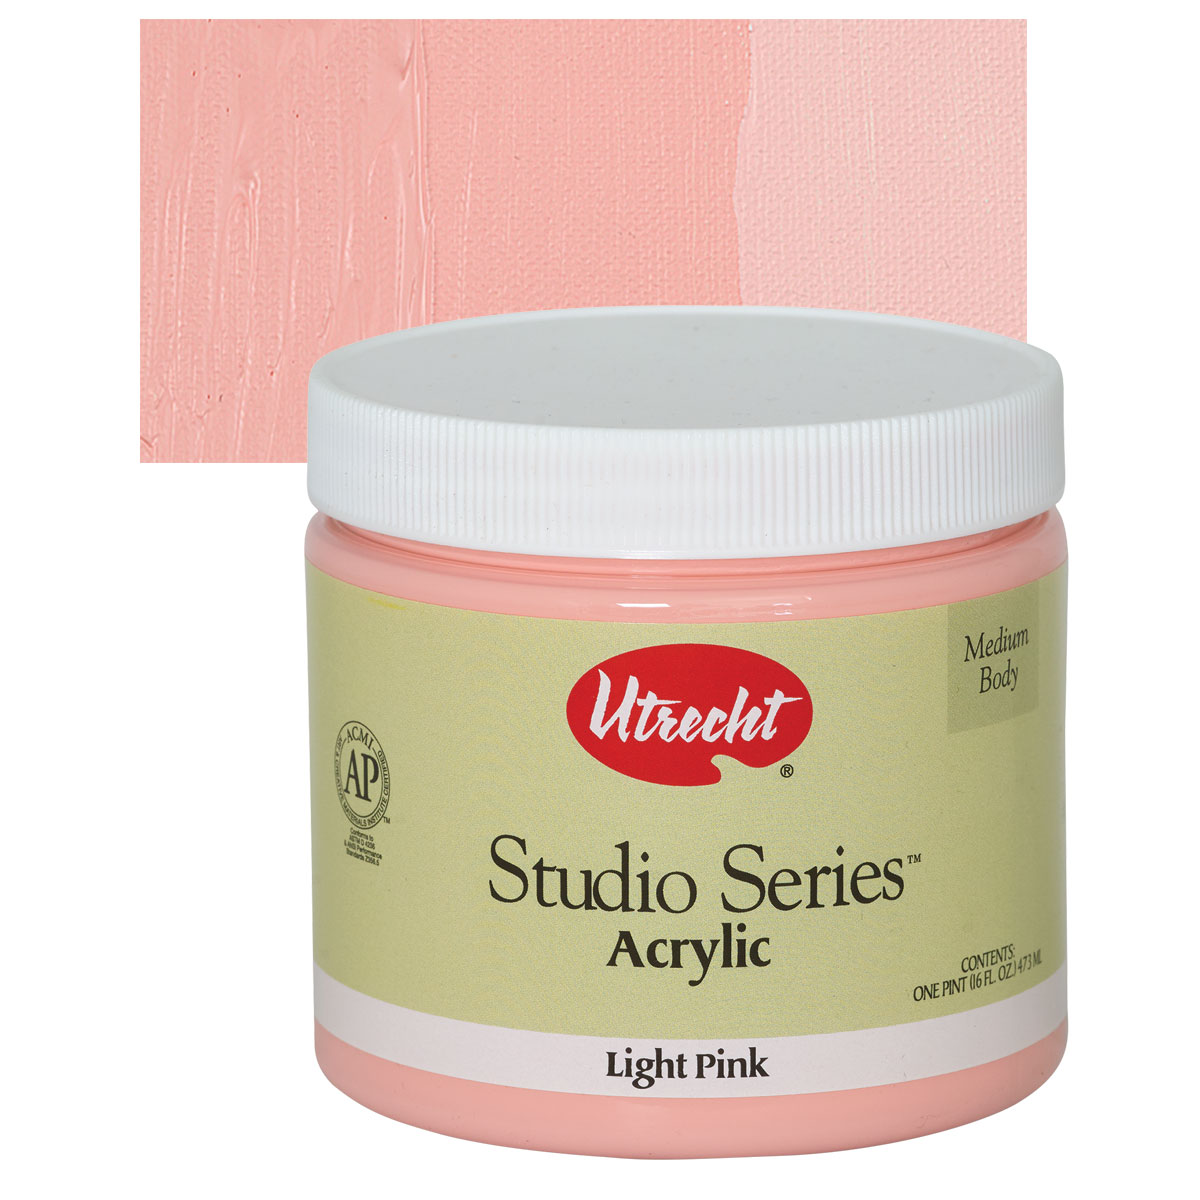 Utrecht Studio Series Acrylic Paint - Light Pink, Pint